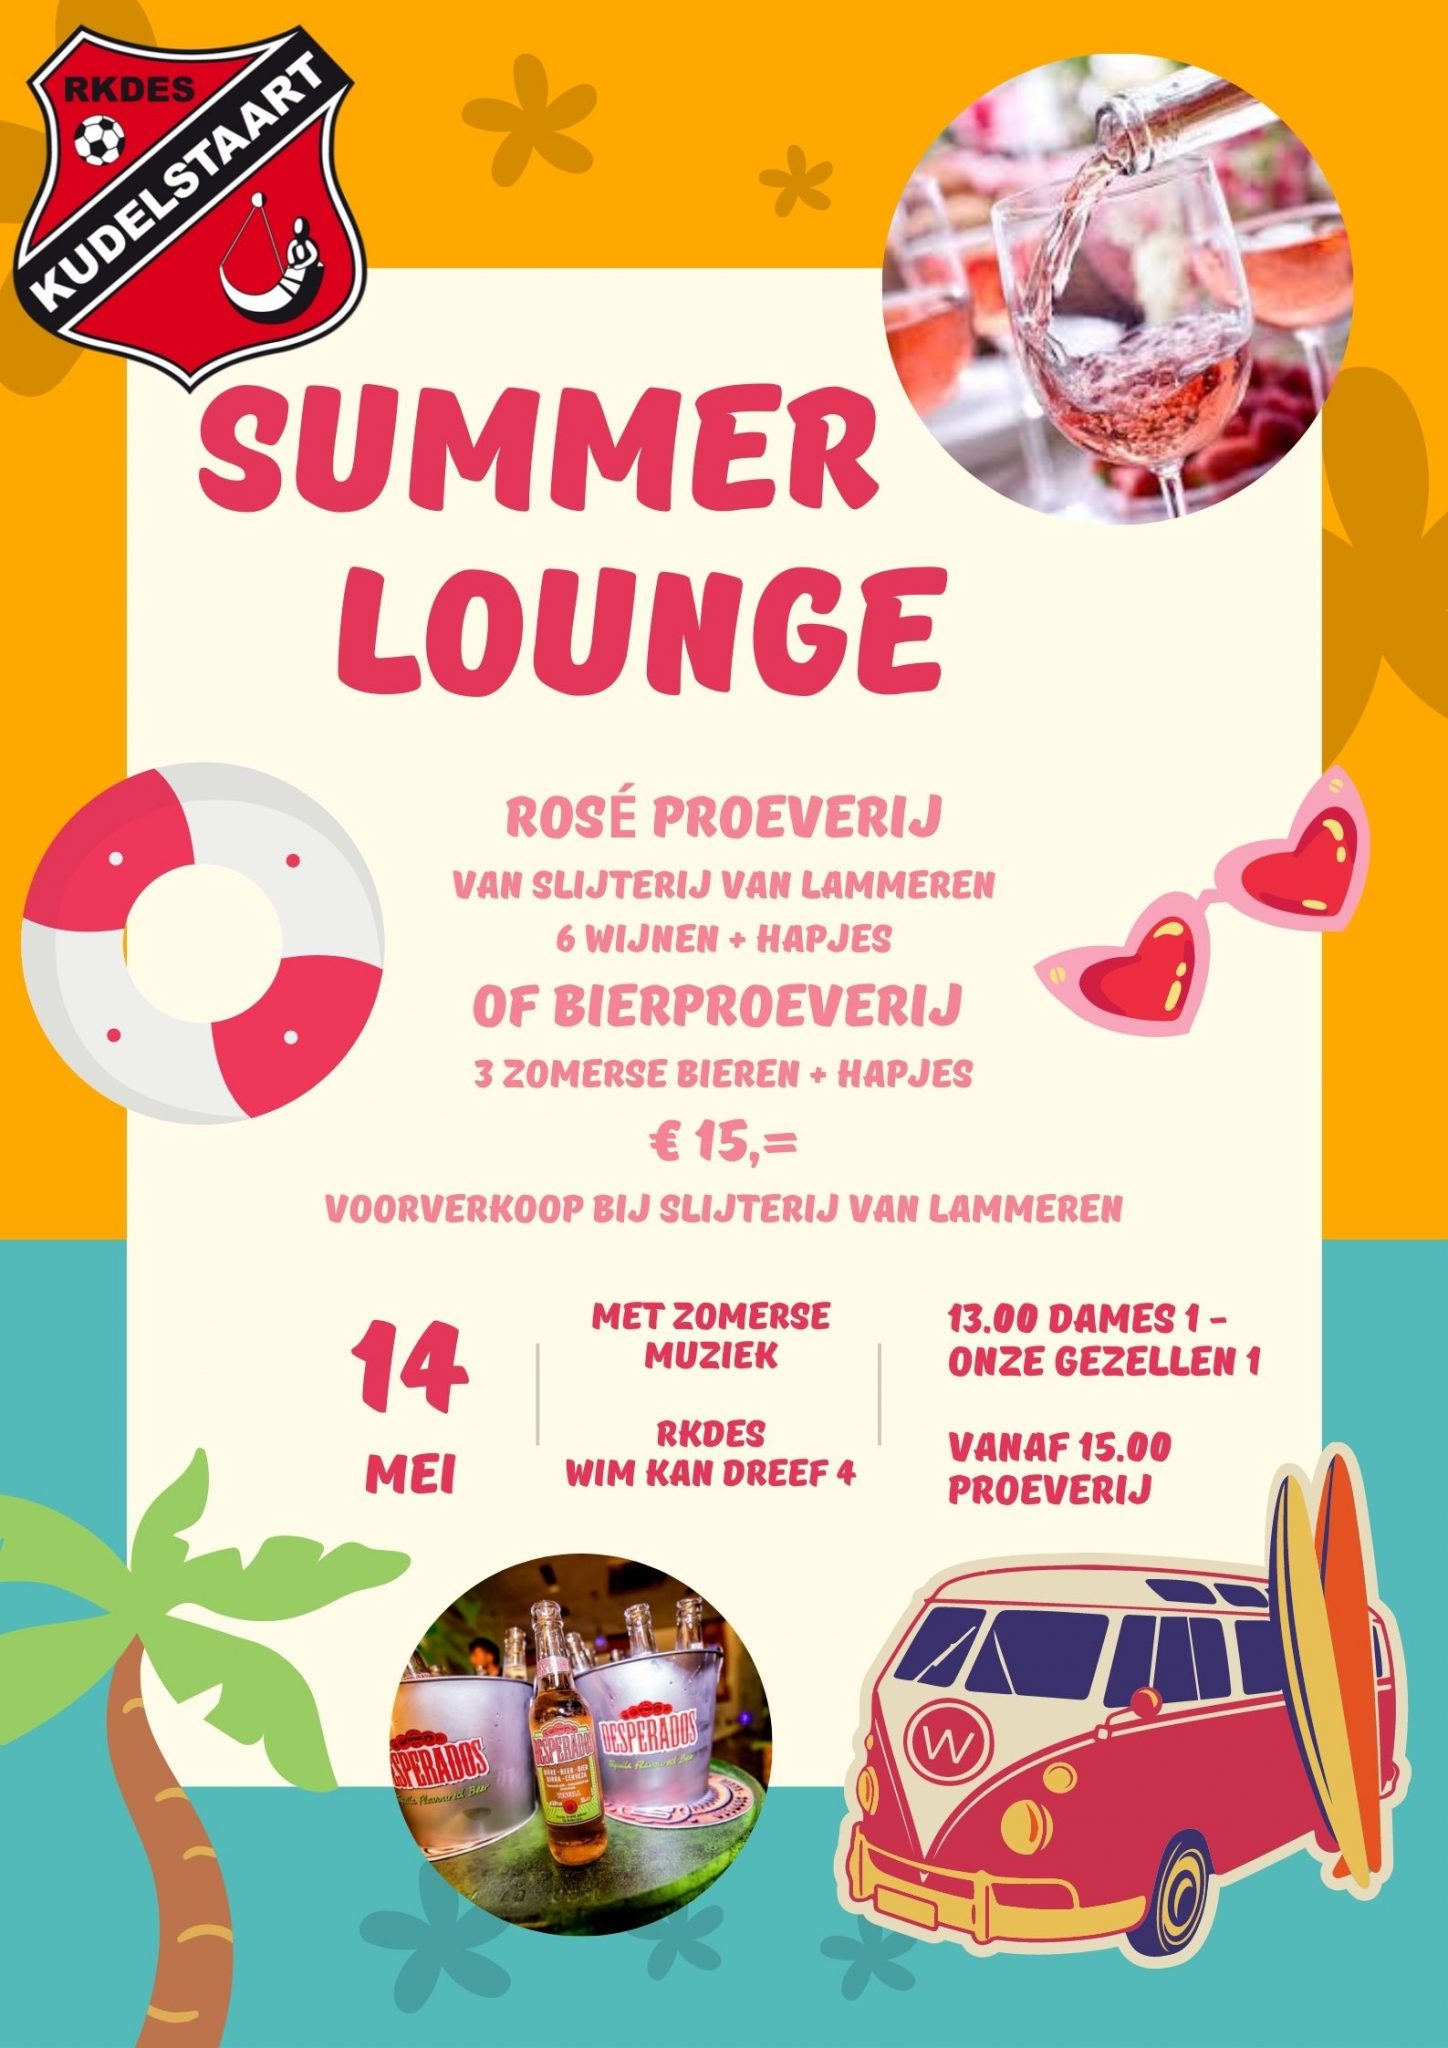 14 mei Summer Lounge met Rosé en Bier proeverij